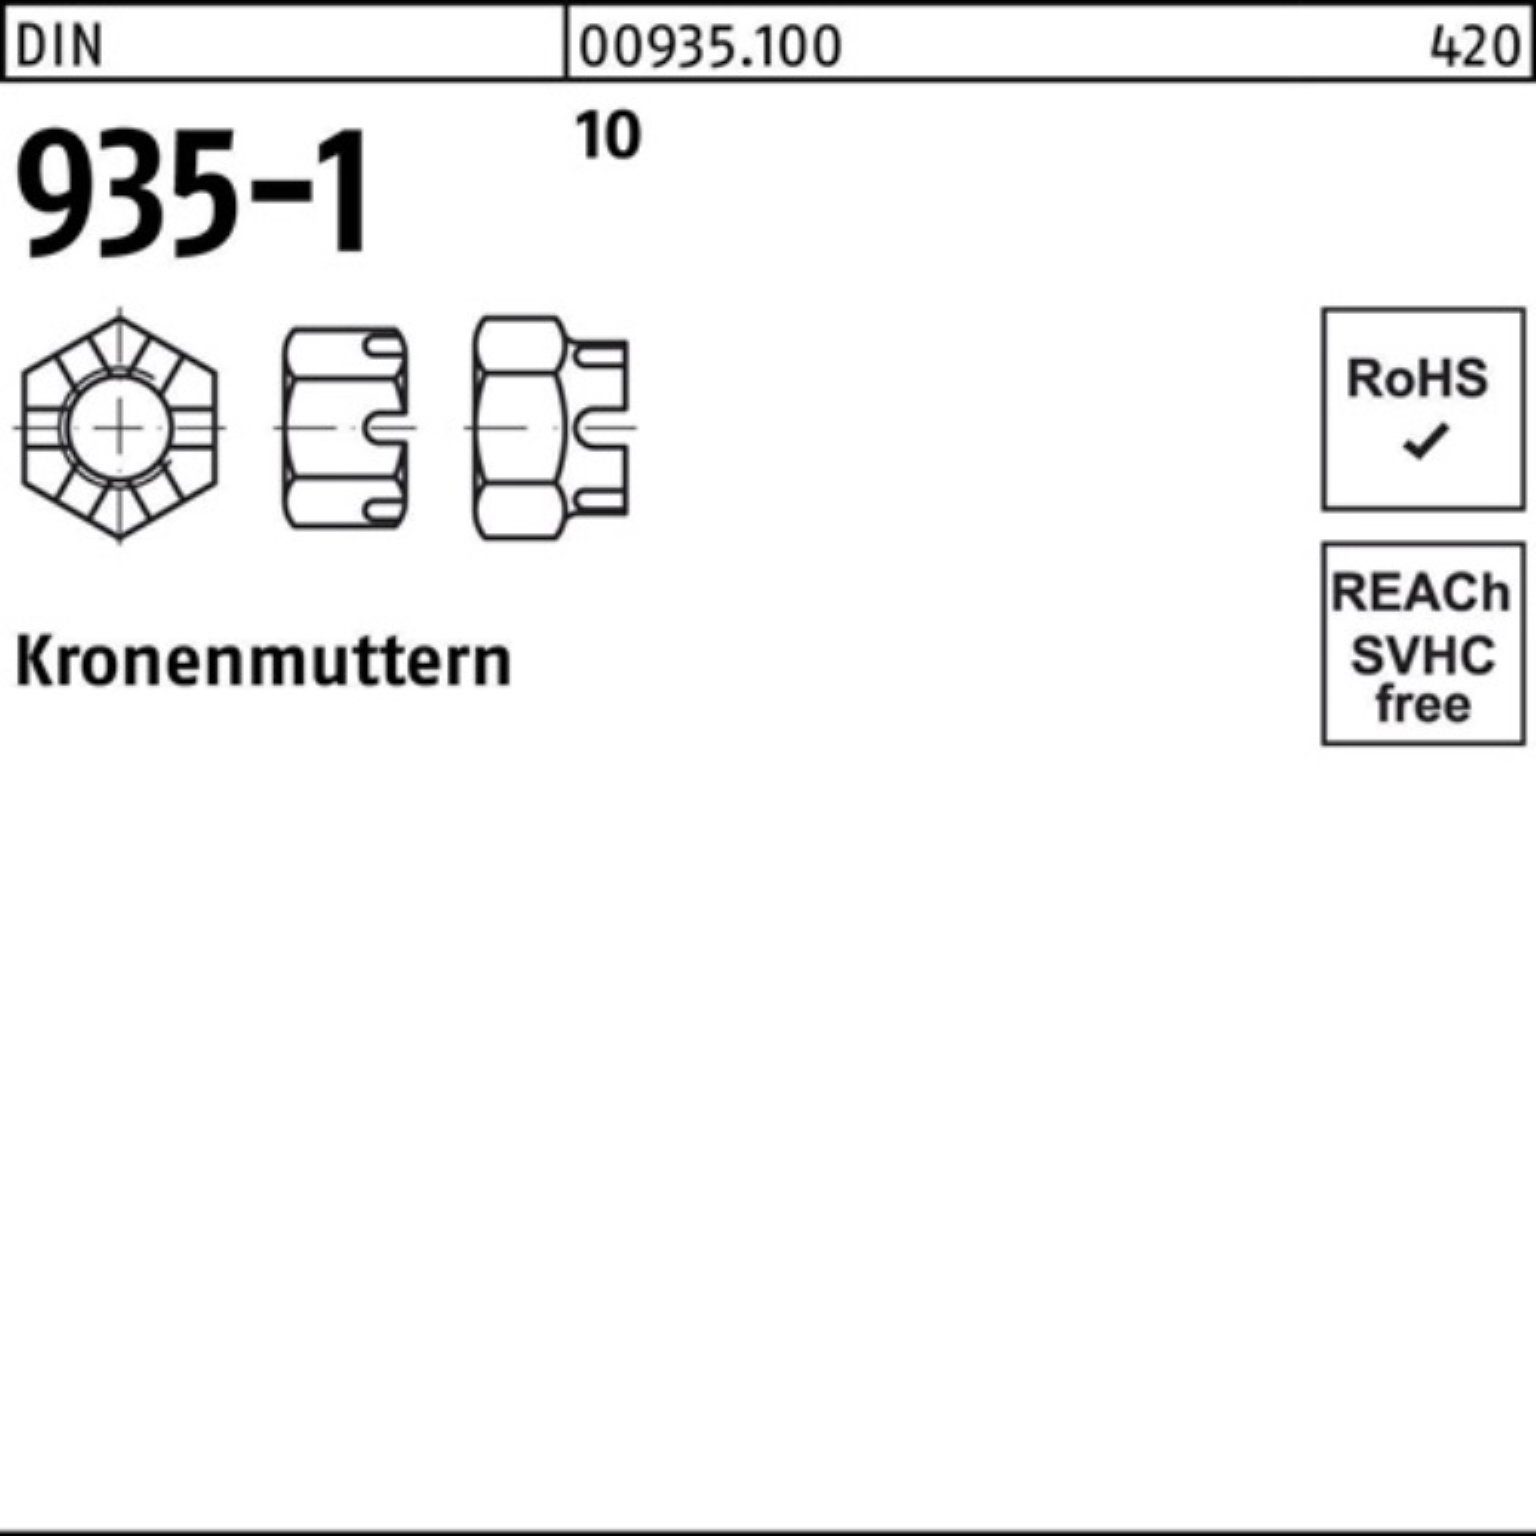 Reyher Kronenmutter Pack DIN 25 DIN 935-1 10 10 Kronen Kronenmutter M24 100er Stück 935-1